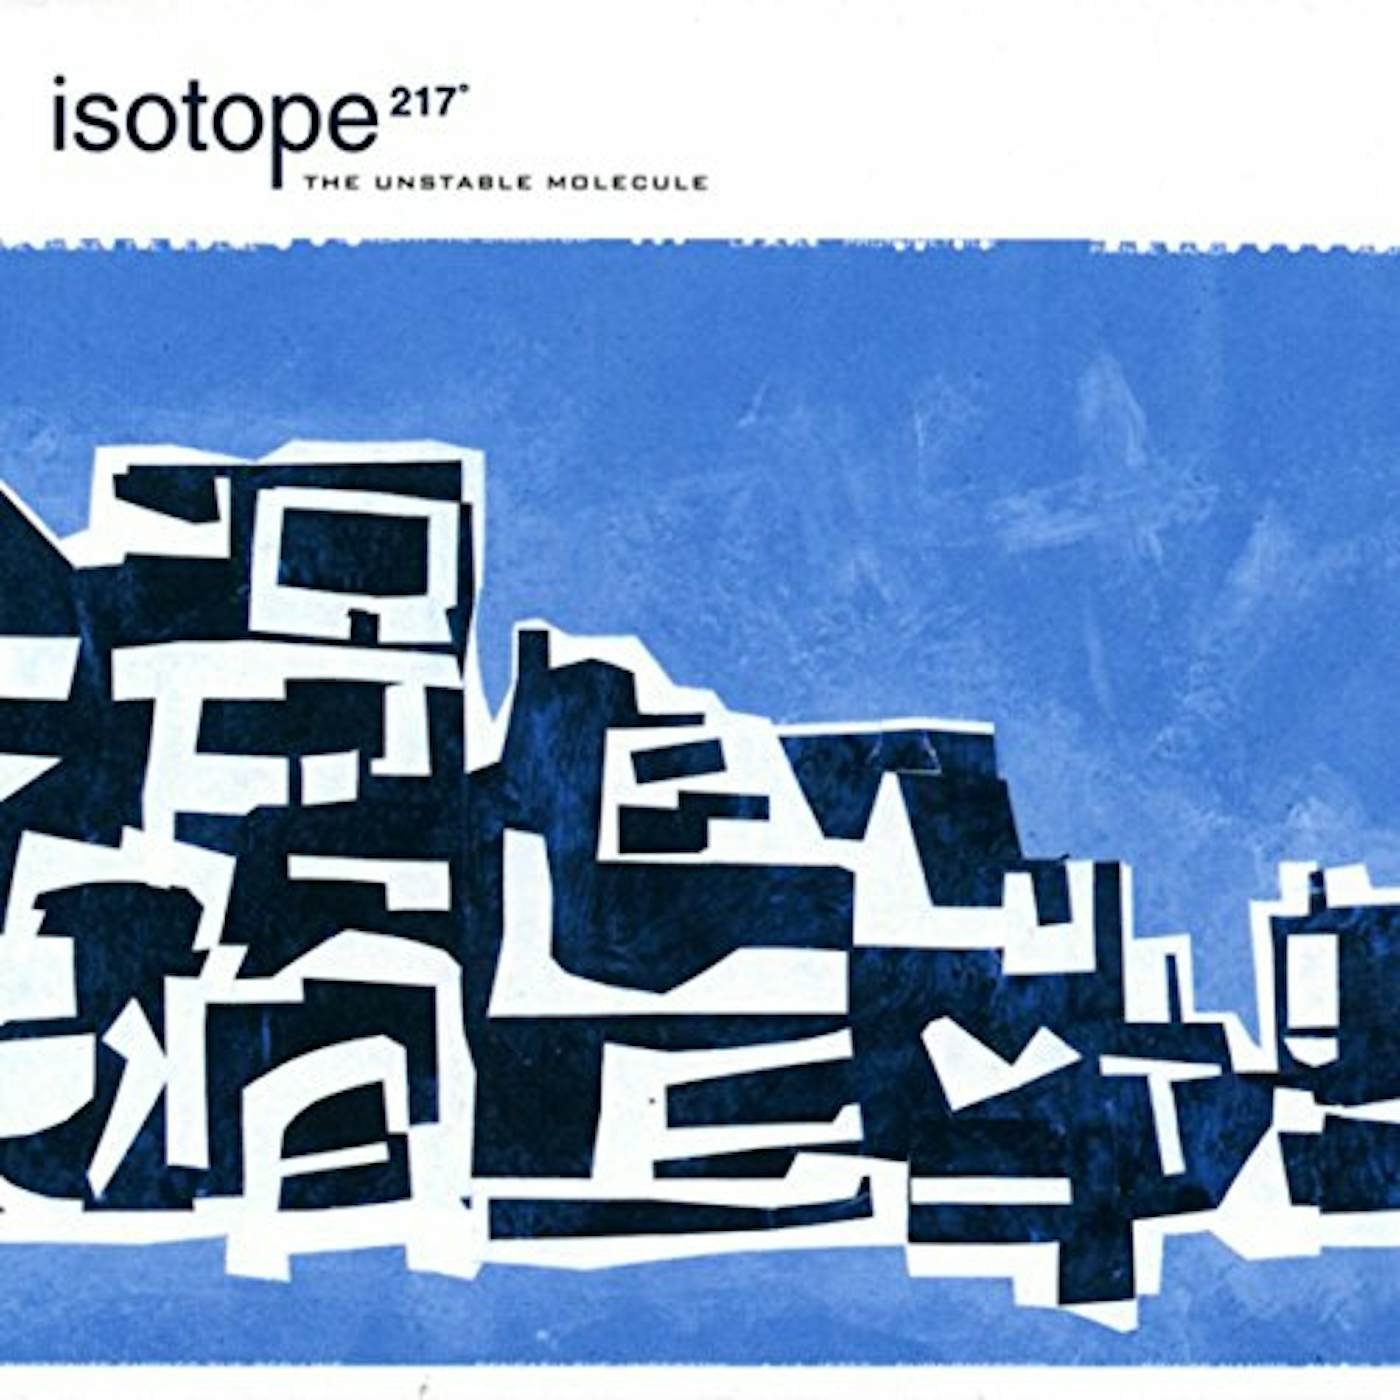 Isotope 217 UNSTABLE MOLECULE Vinyl Record